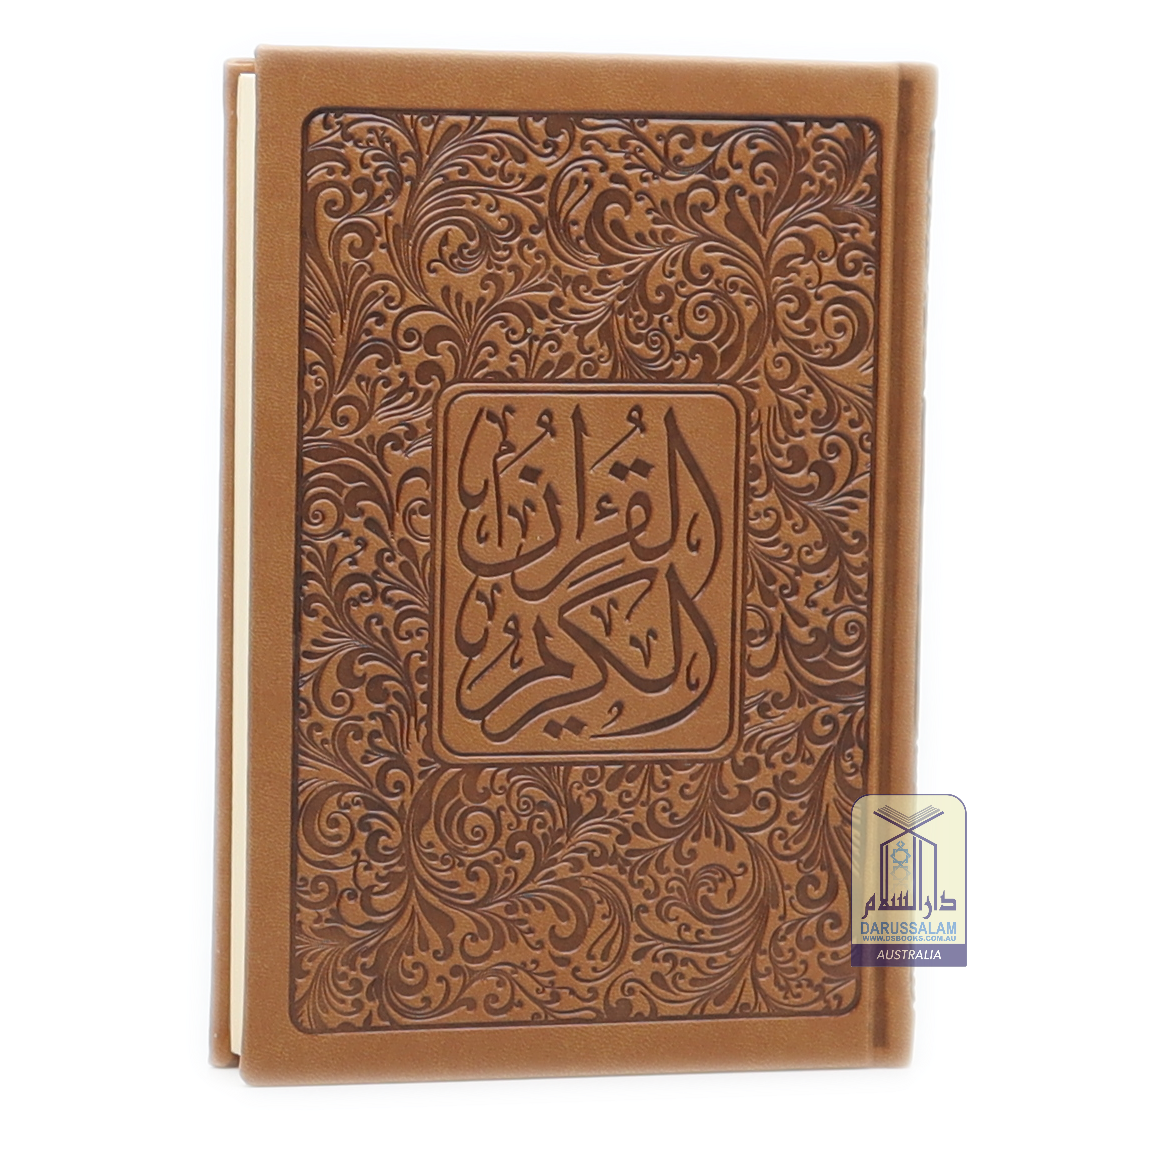 Quran 14.5x20.5cm A5, Chocolate Brown - Cream pages, Arabic Text Uthmani Script Cover Design